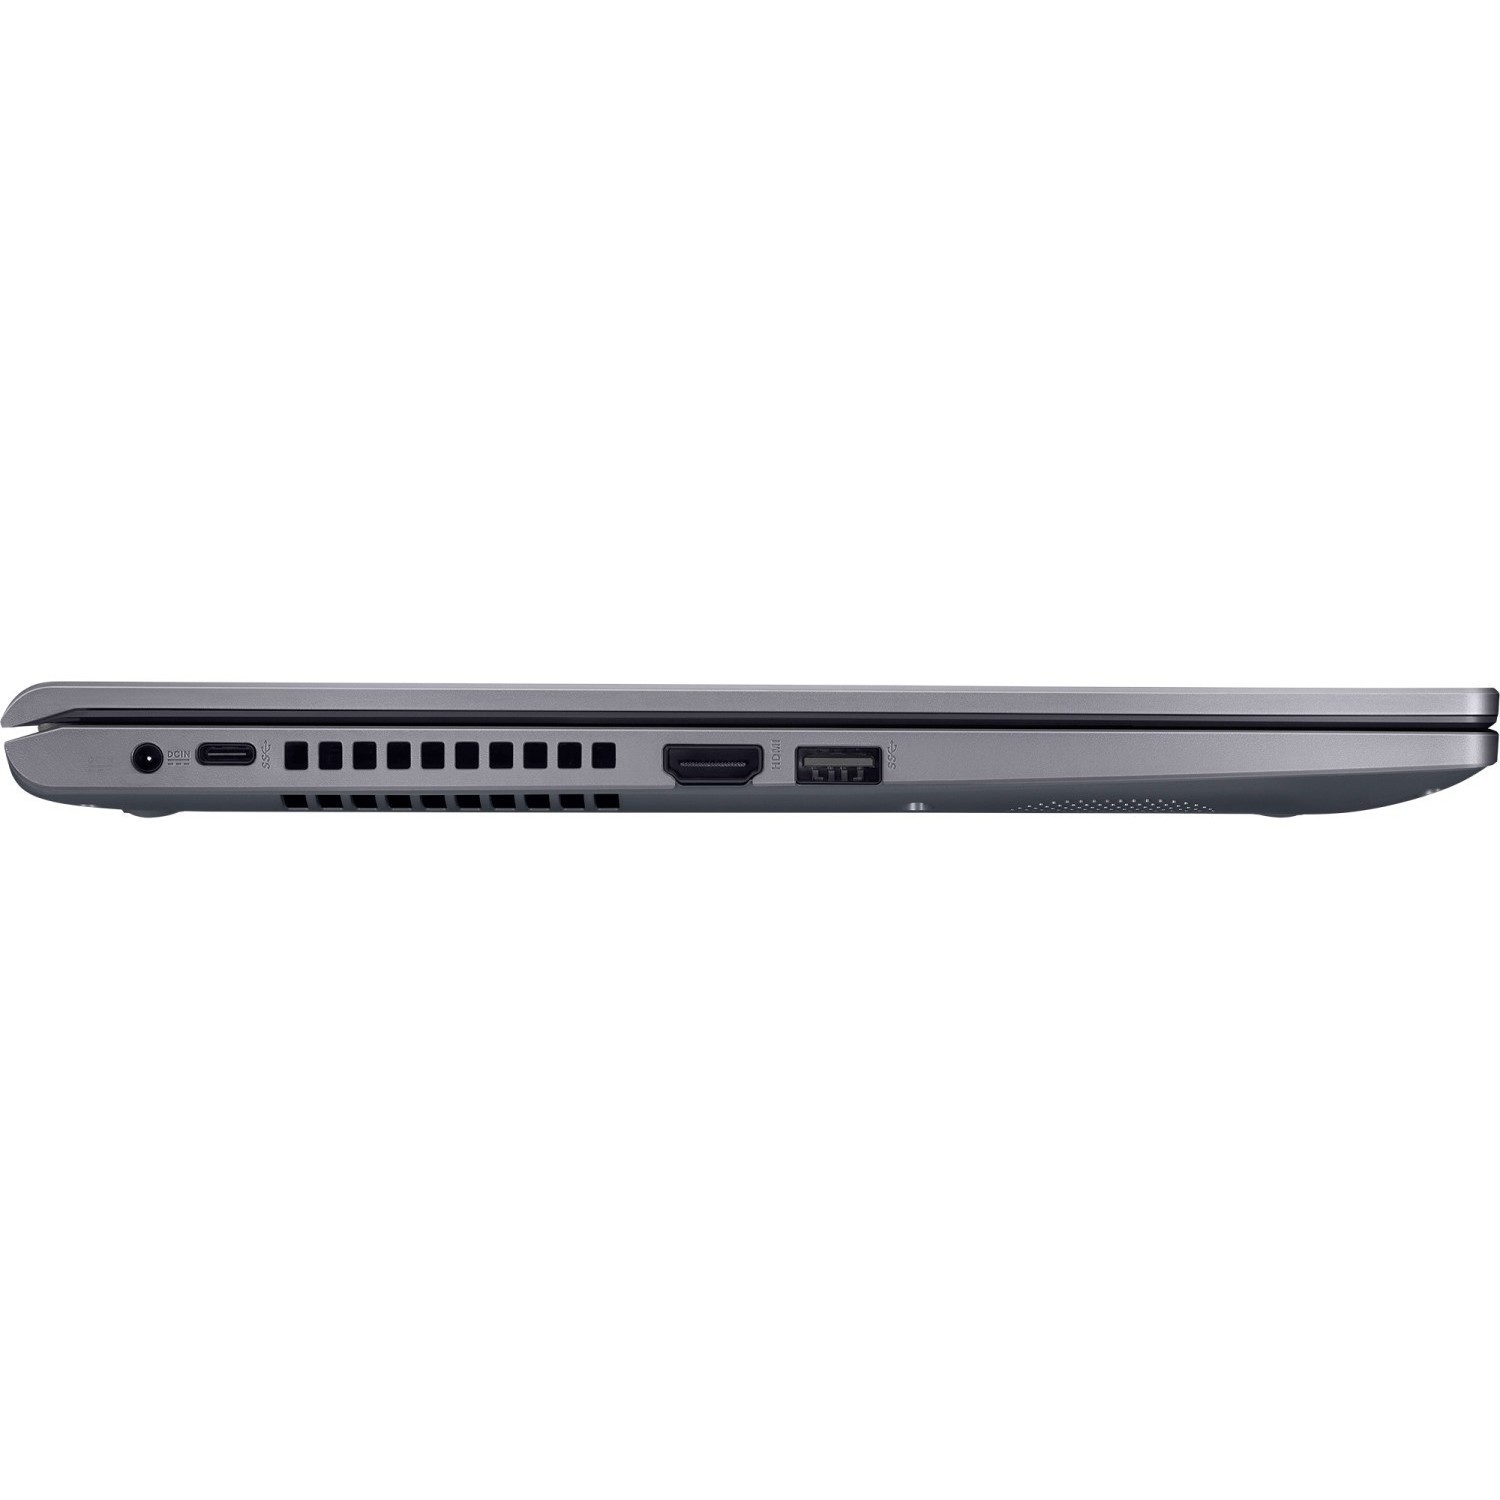 Ноутбук Asus A516ja Bq463t Купить